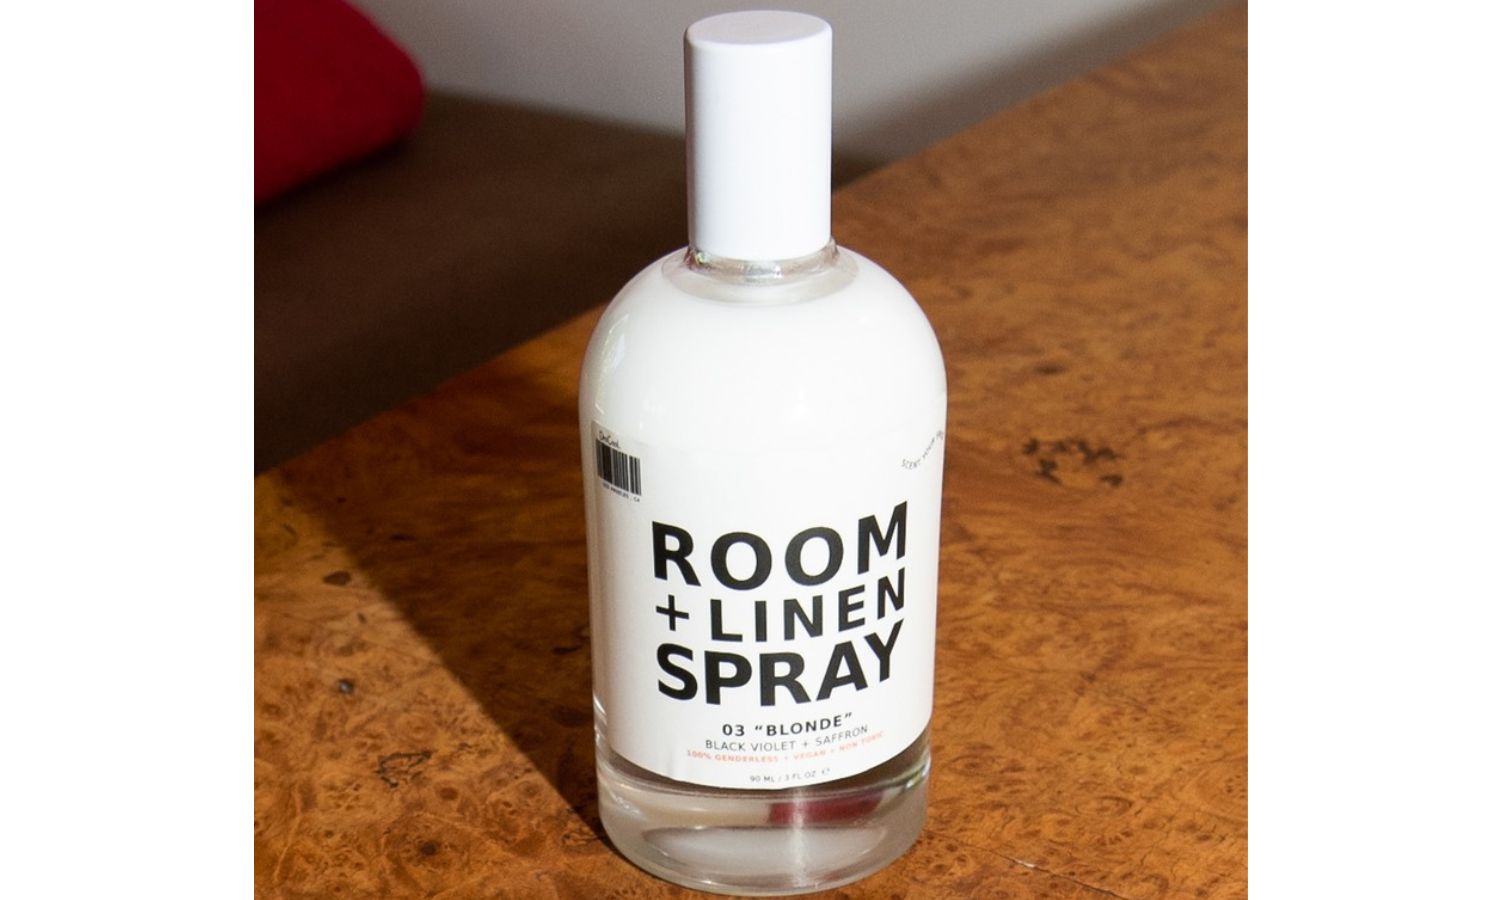 DedCool Room and linen spray